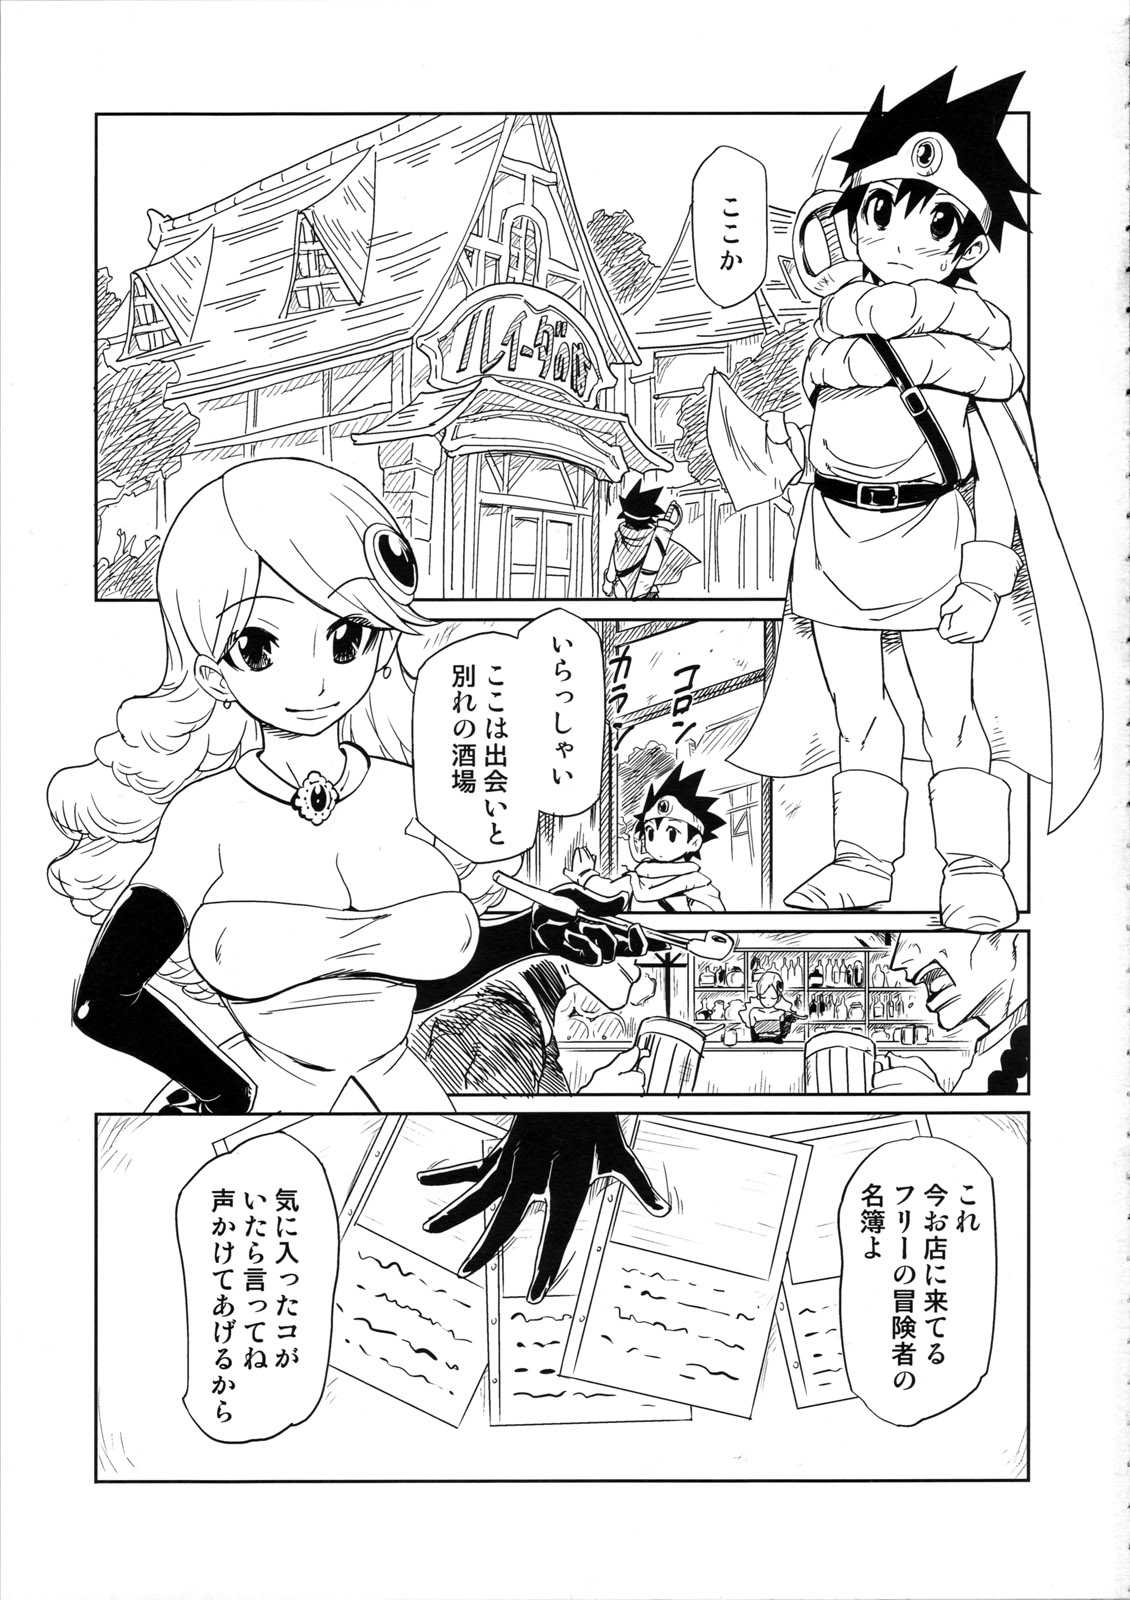 [Finecraft69] Bouken shiyotsu!. Junbigou (Dragon Quest III) {masterbloodfer} 